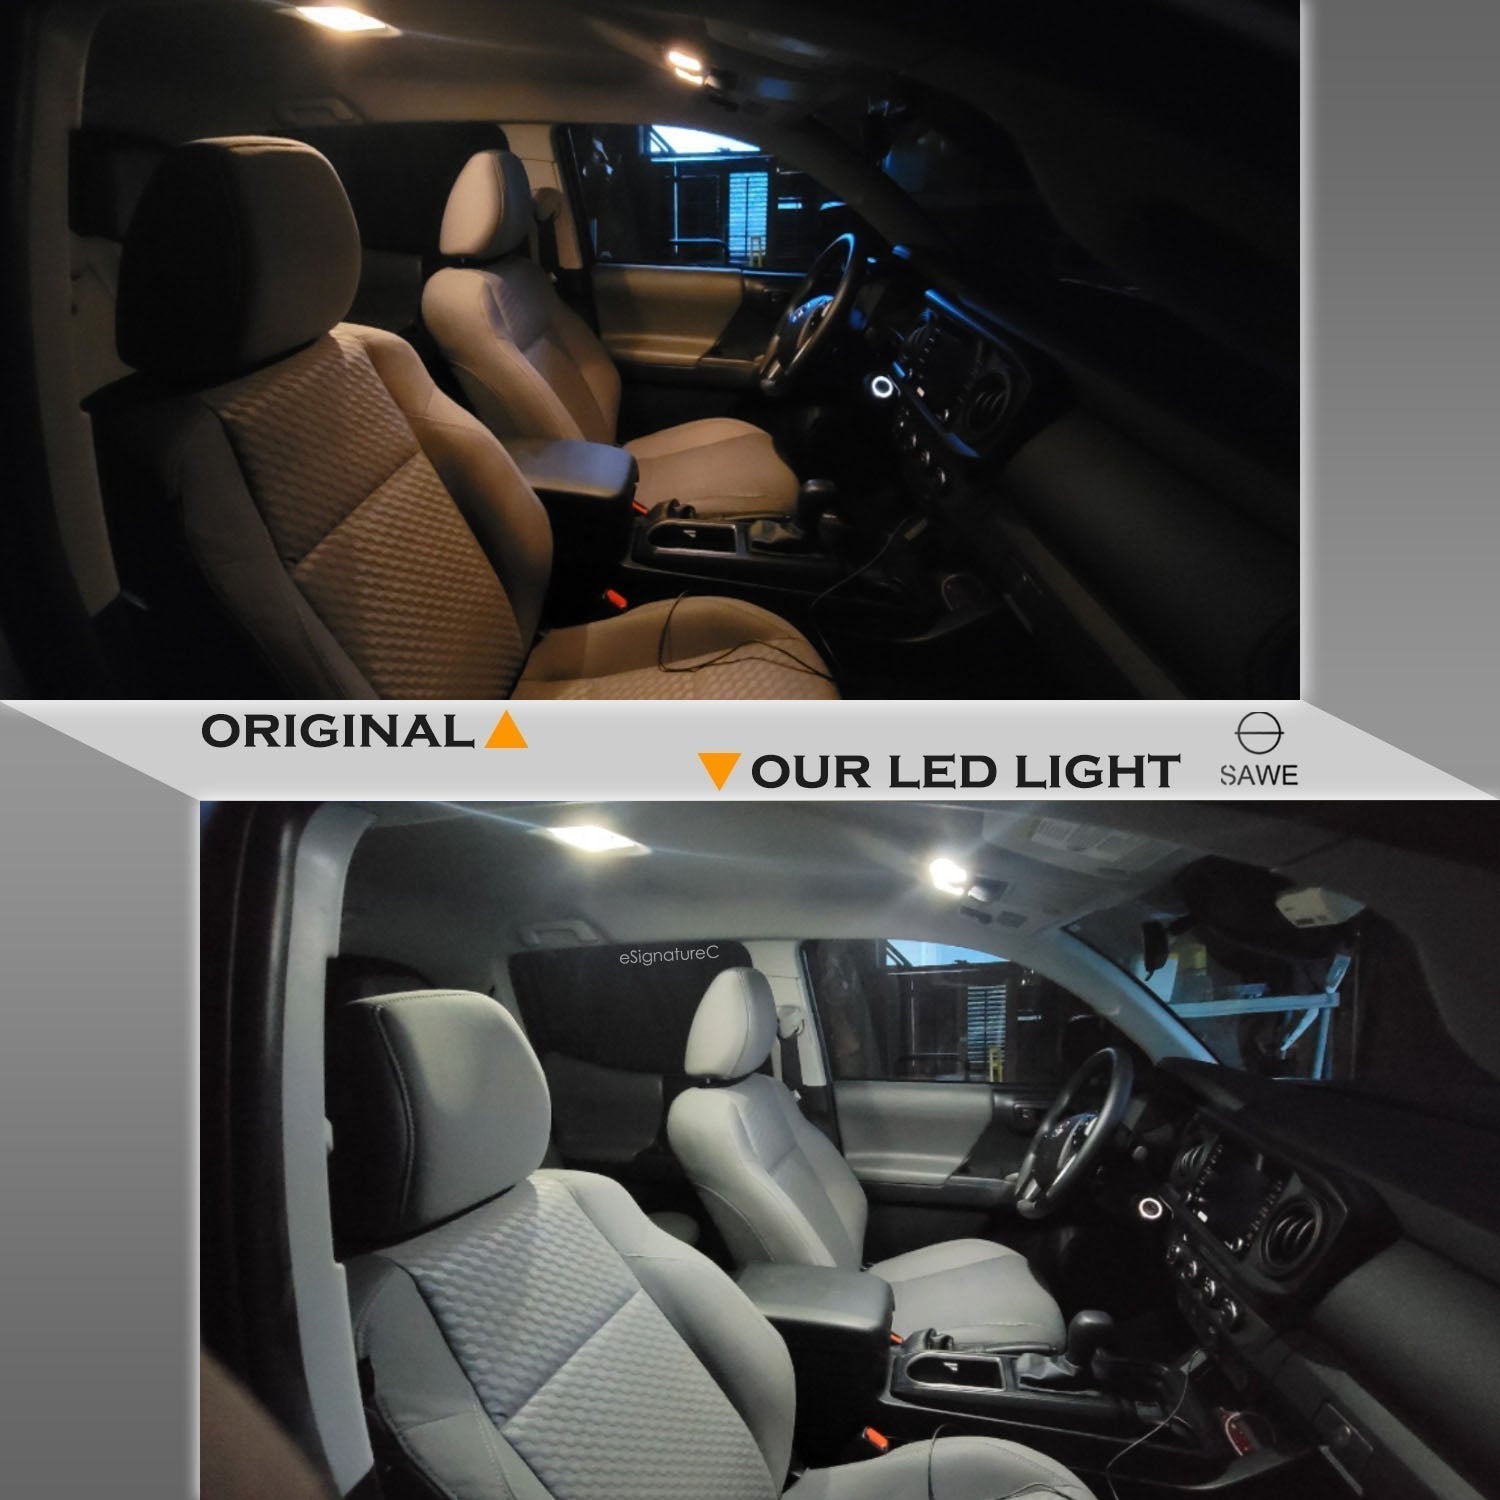 For Dodge Ram 1500 2500 3500 Interior LED Lights - Dome & Map Lights Package Kit for 2011 - 2018 - White